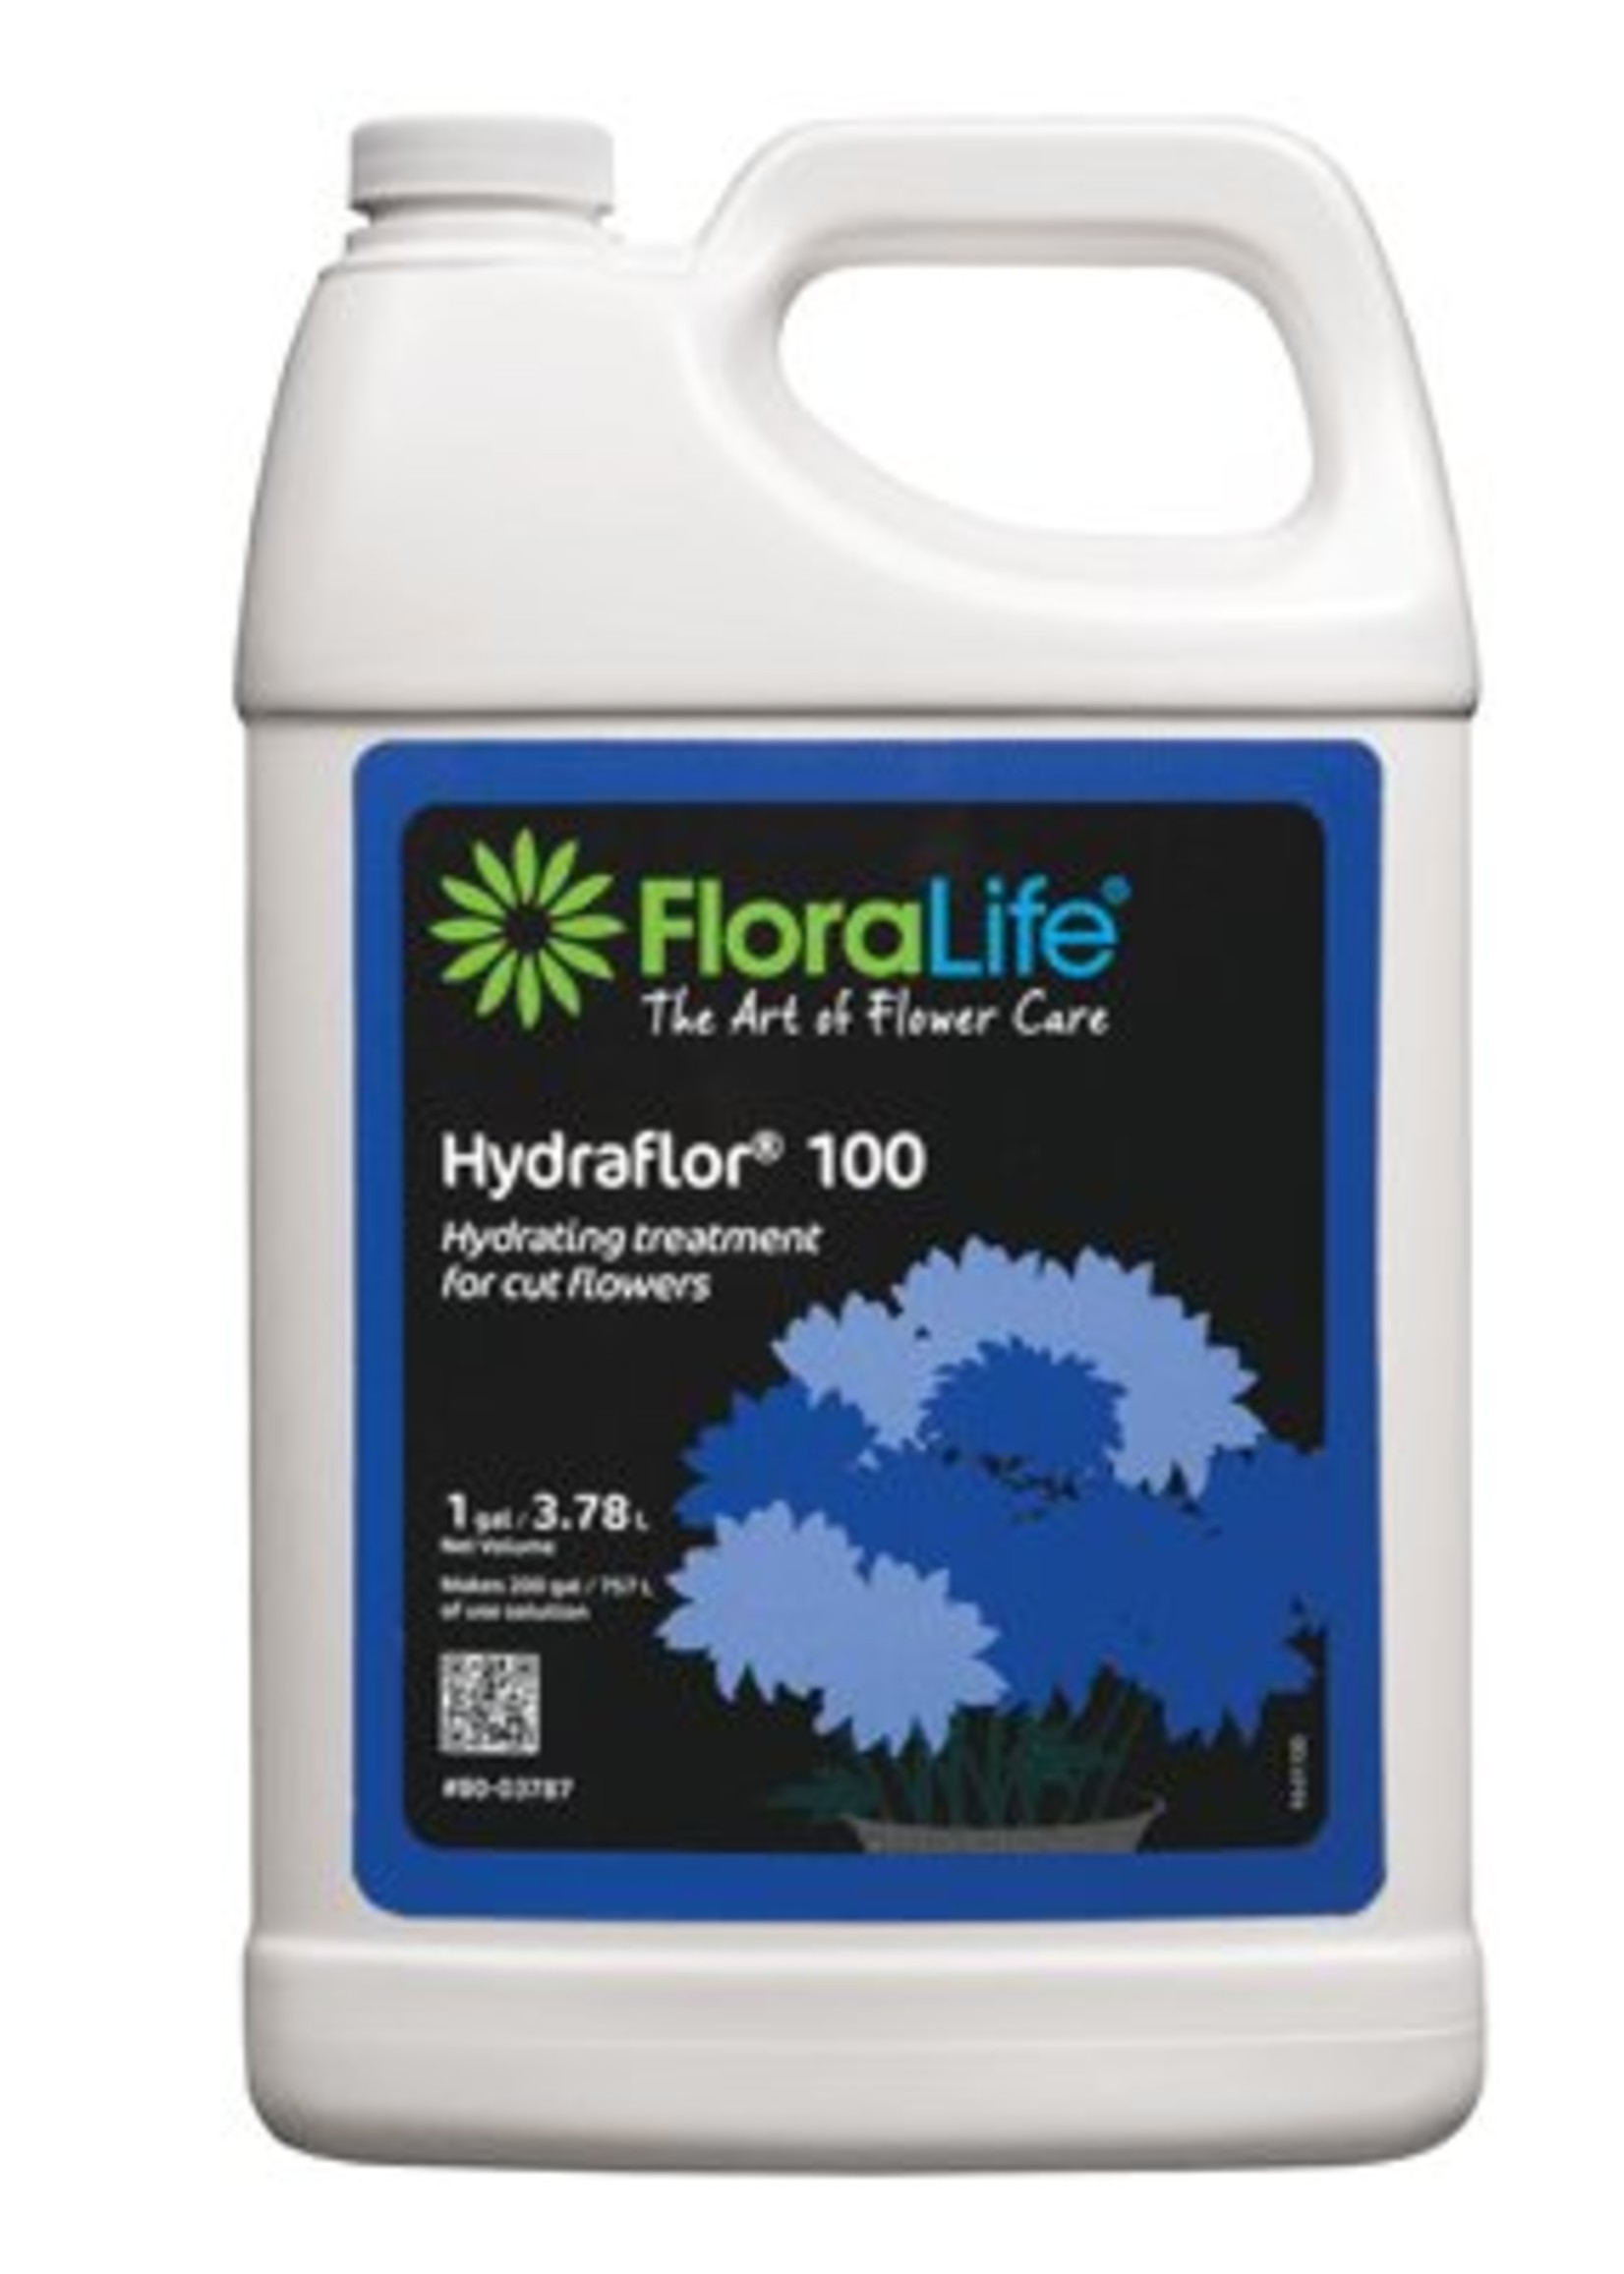 Floralife® HydraFlor Clear 100 hydration solution